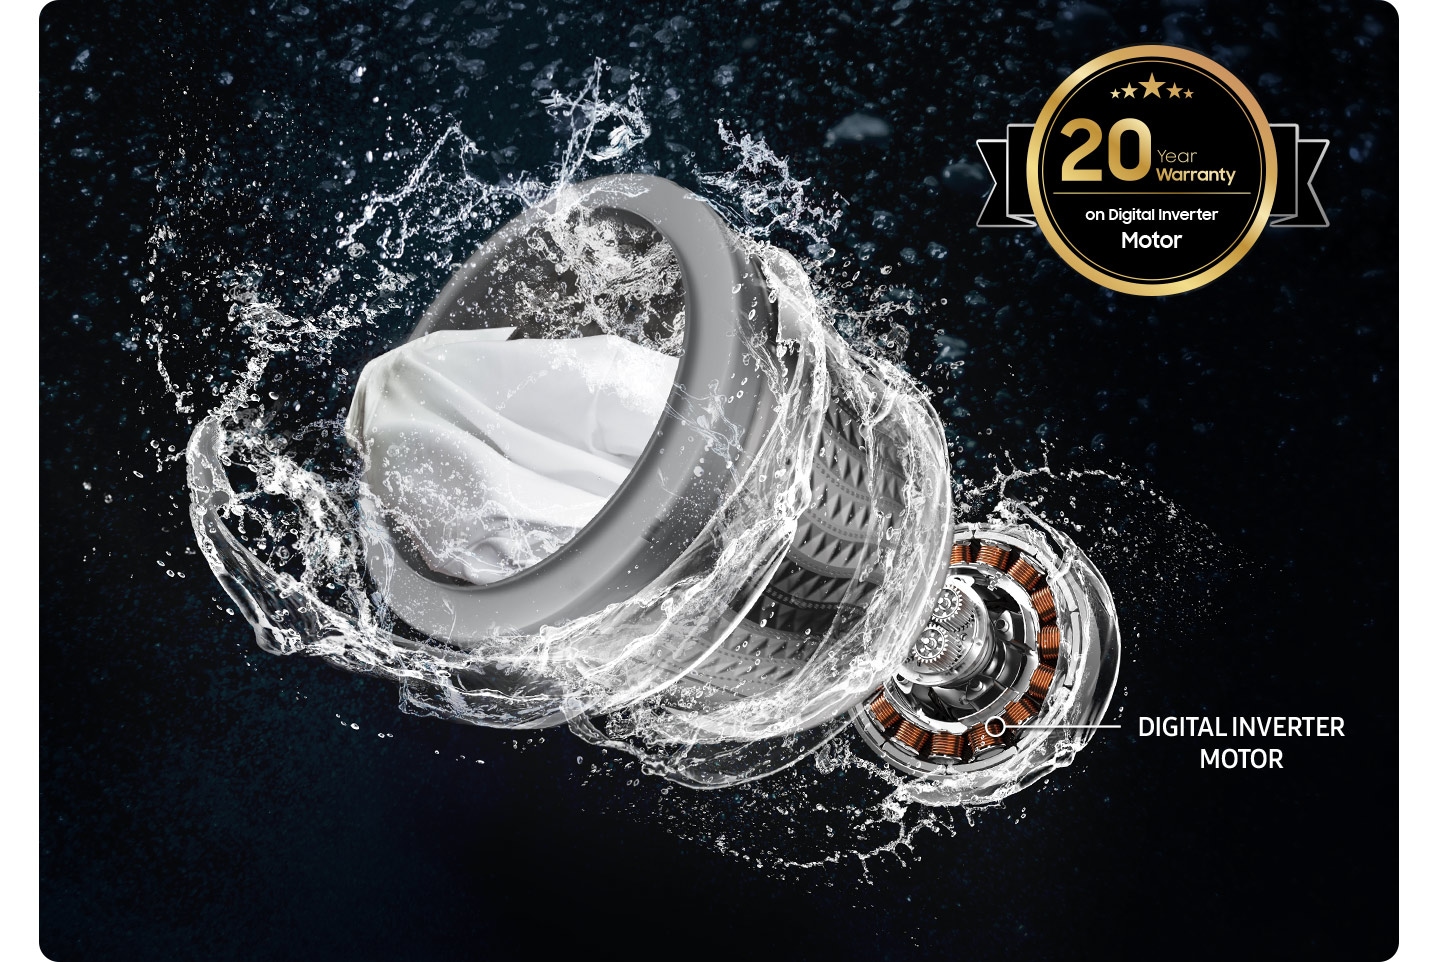 Digital Inverter Motor, drum and water stream spins fast. WA5000C’s warranty is 20 year.